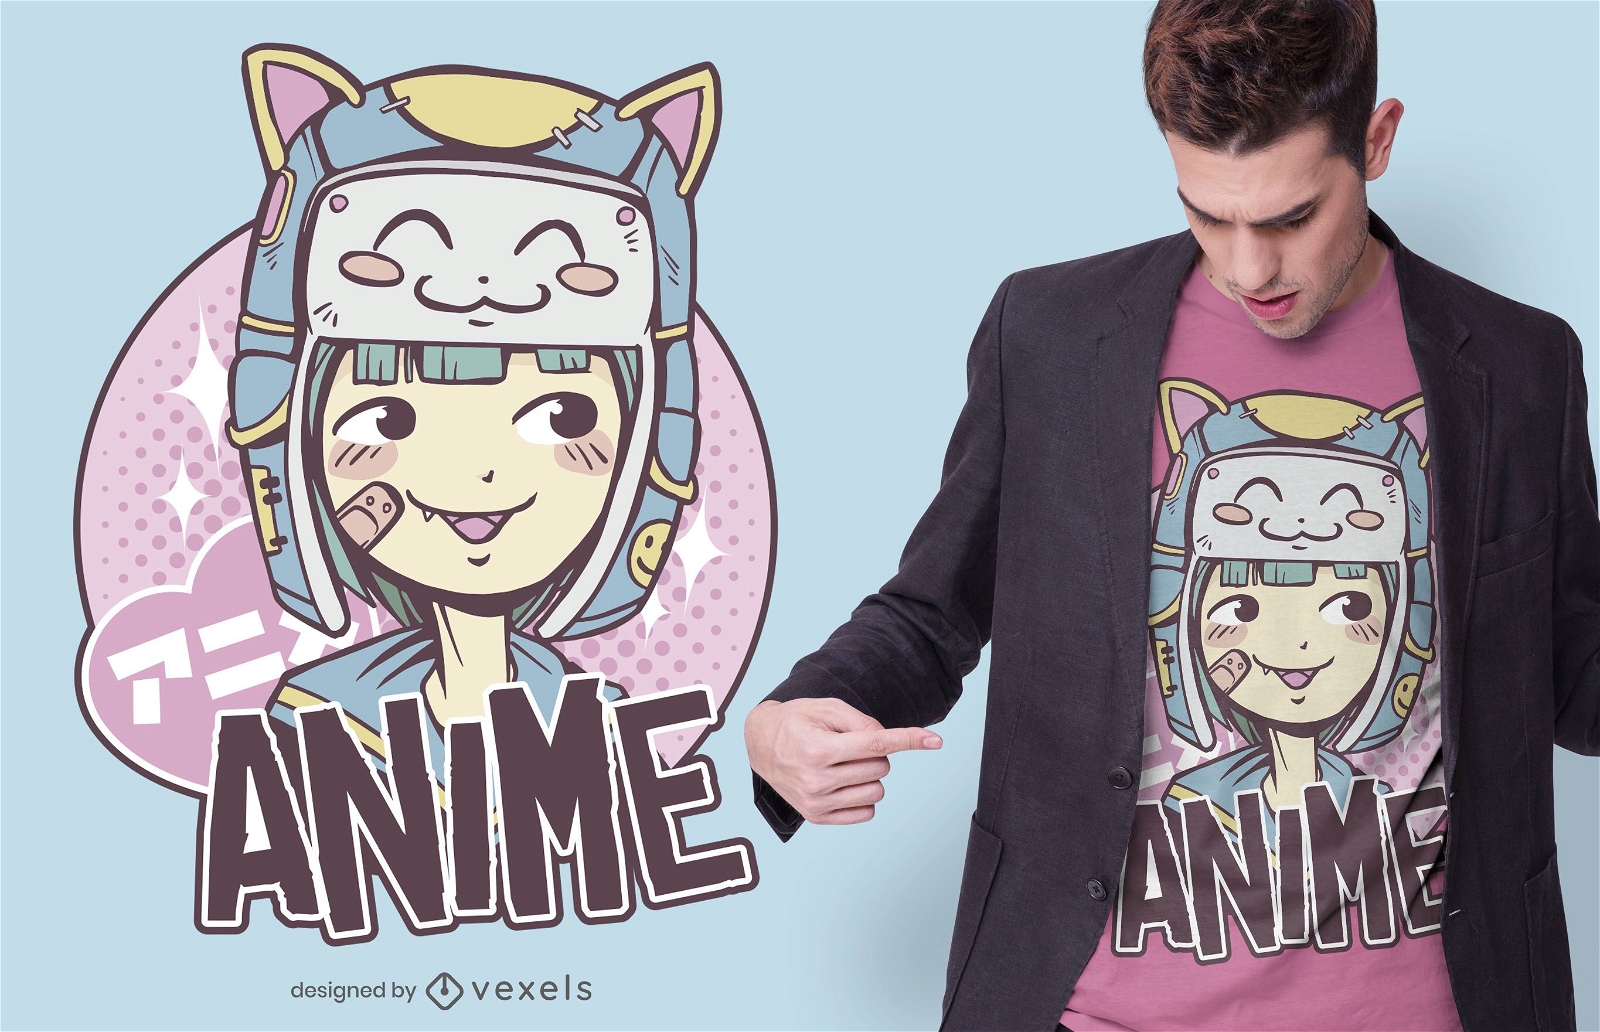 Anime s??es M?dchen T-Shirt Design